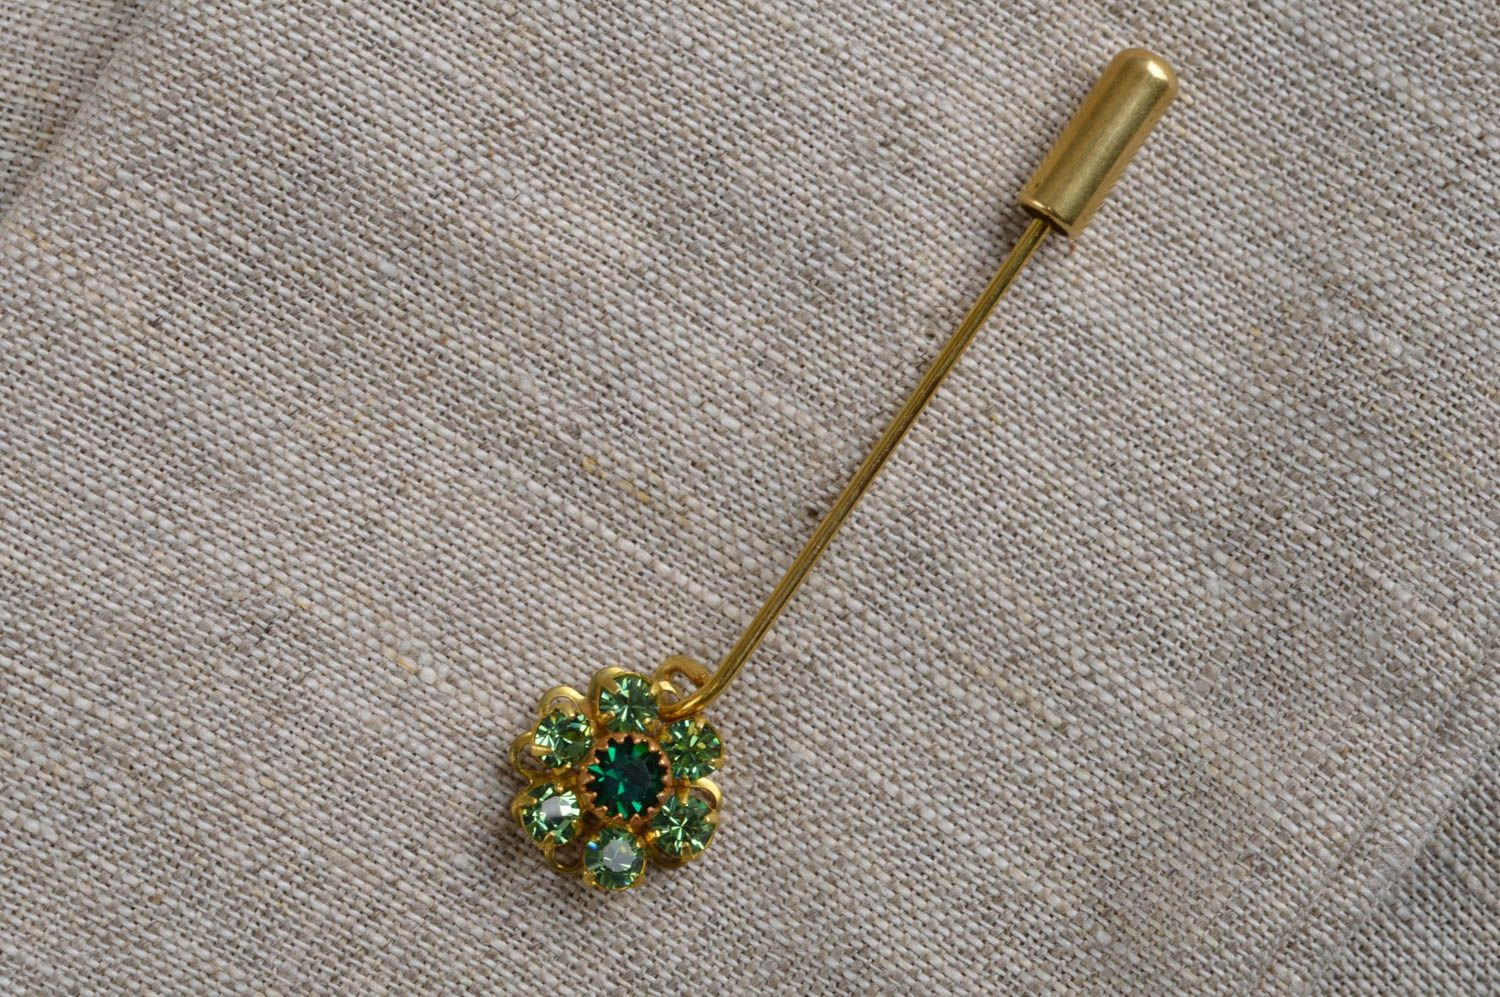 Stylish handmade metal brooch gemstone brooch jewelry cool jewelry designs photo 5